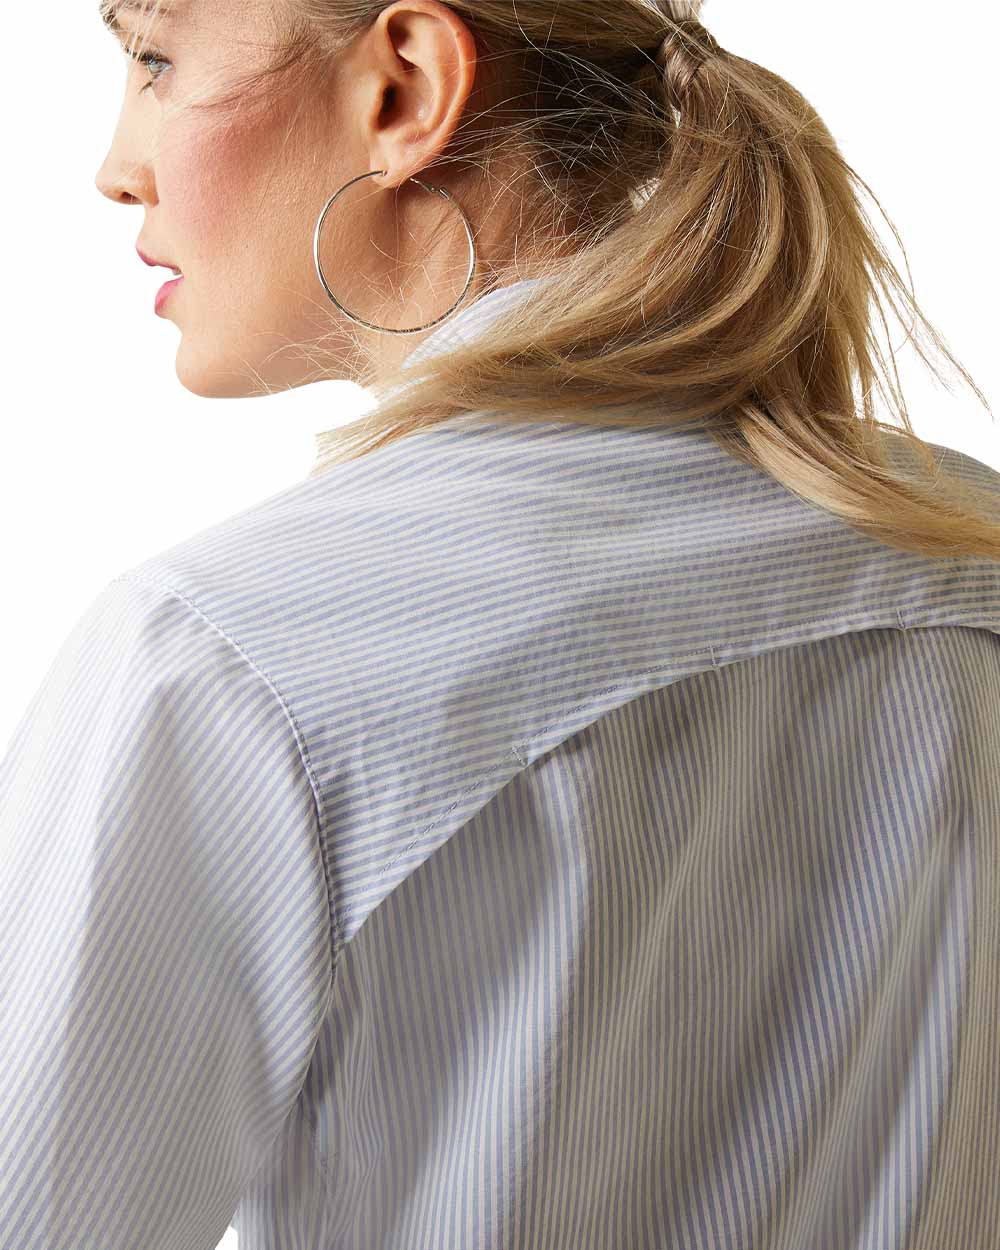 Classic Blue Stripe Ariat Womens VentTEK Stretch Long Sleeve Shirt on White background 